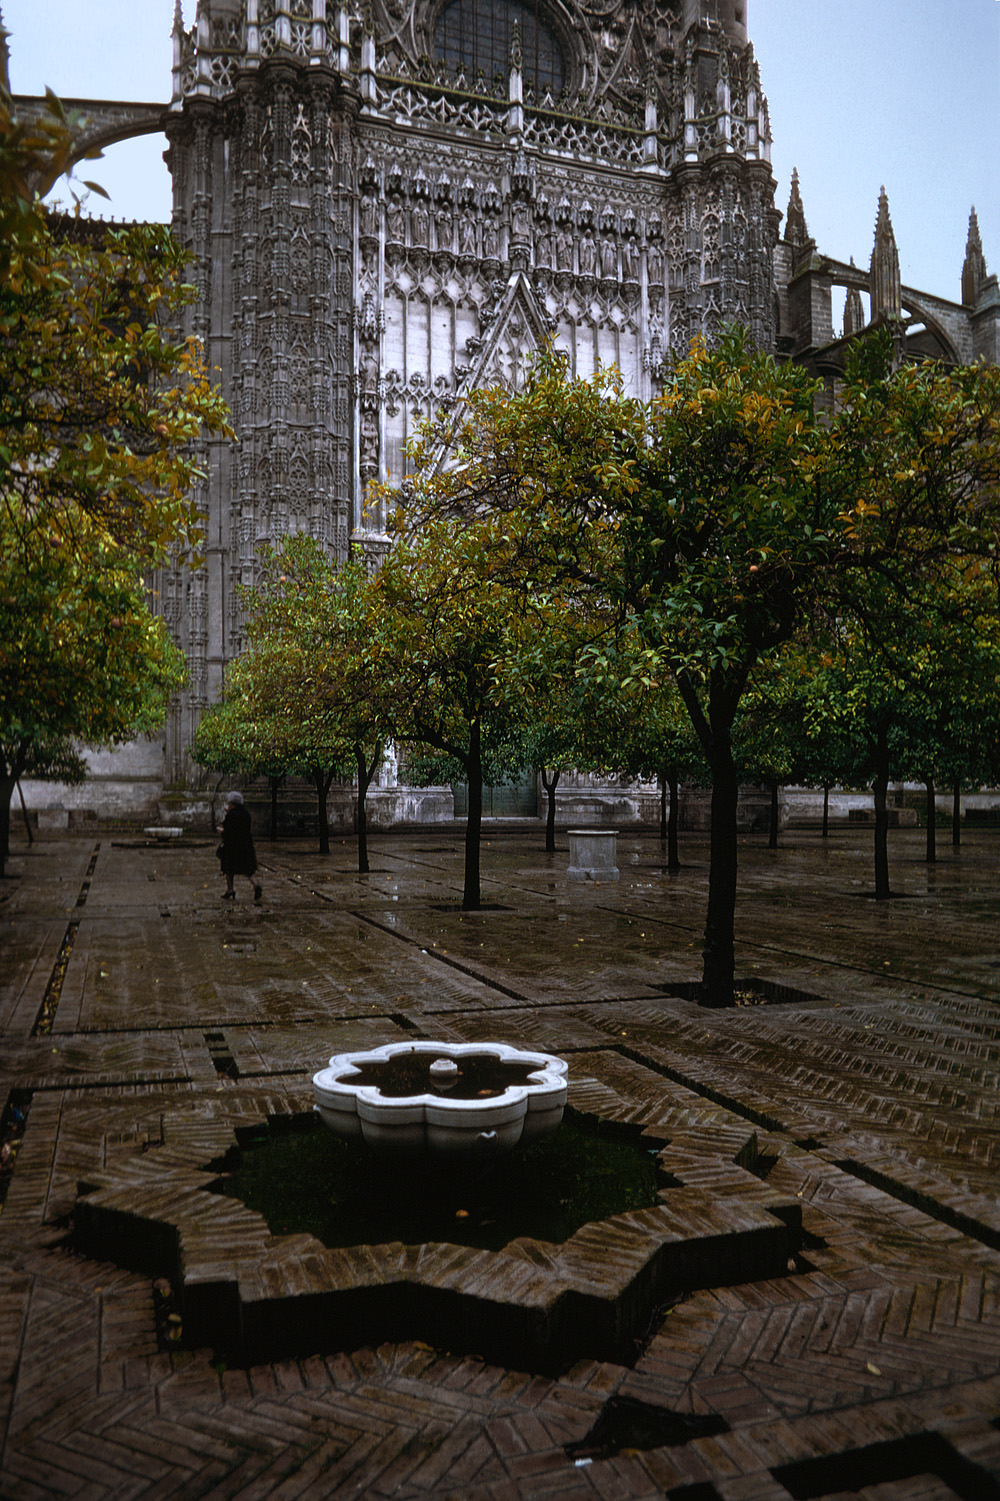 bill-hocker-cathedral-courtyard-sevilla-spain-1983